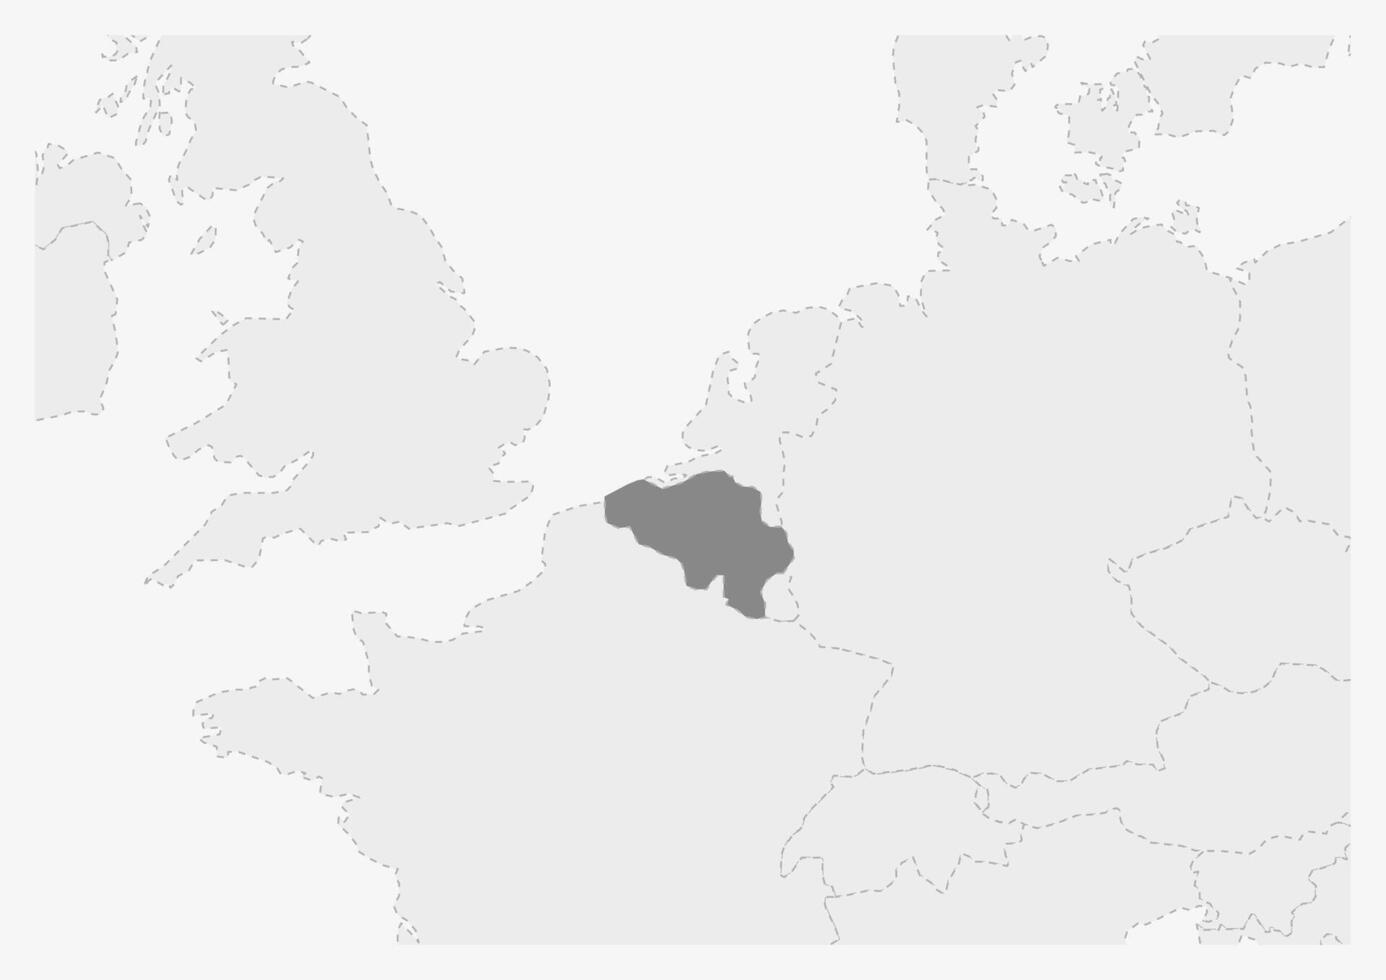 Karte von Europa mit hervorgehoben Belgien Karte vektor